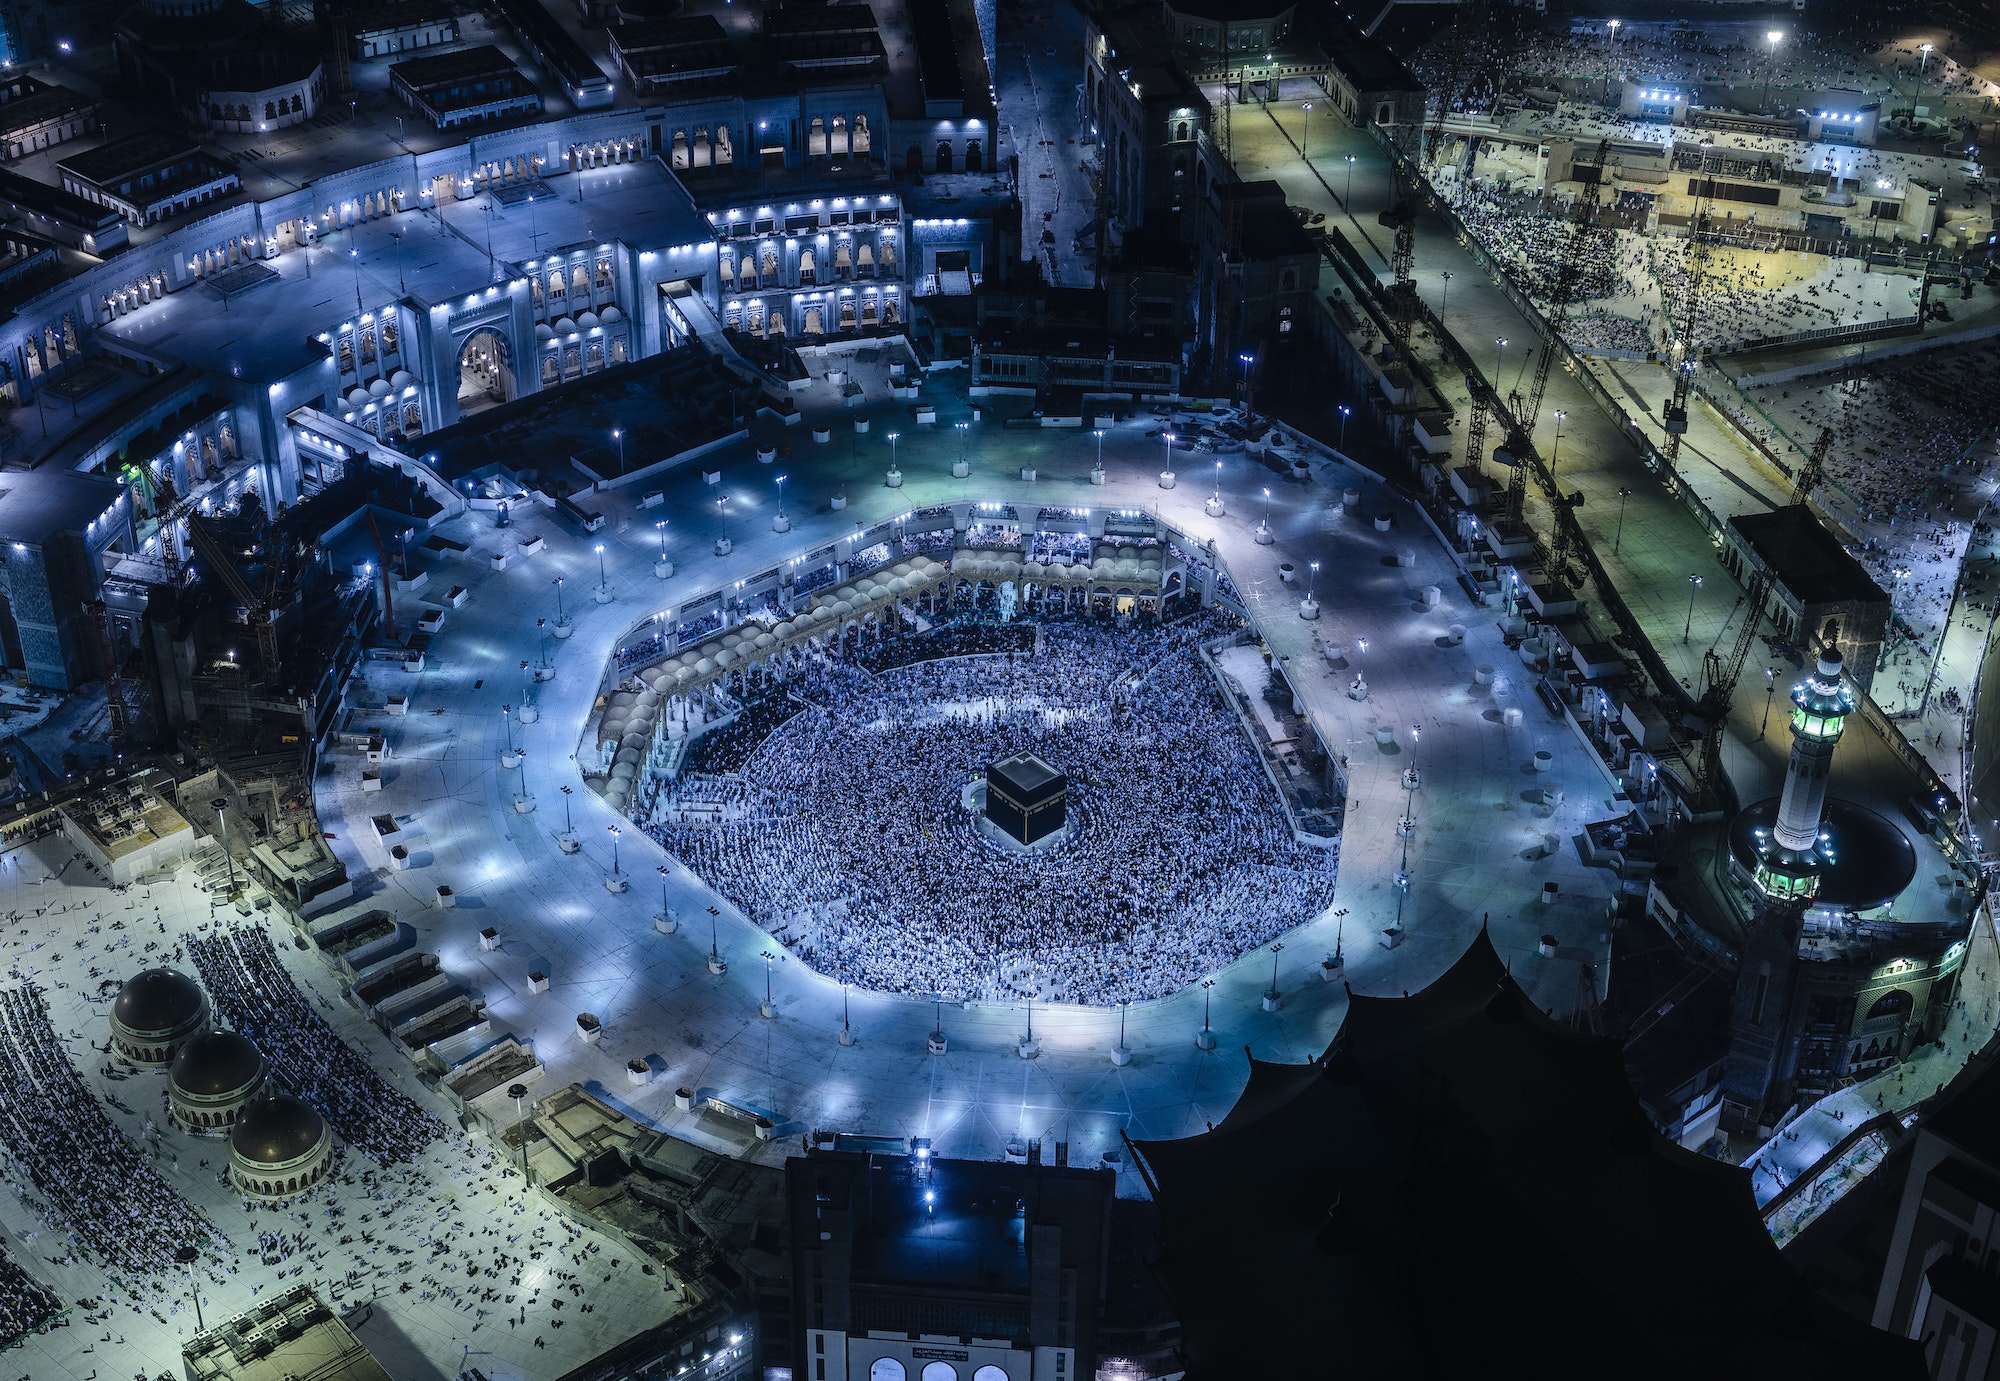 Mecca, Saudi Arabia at night